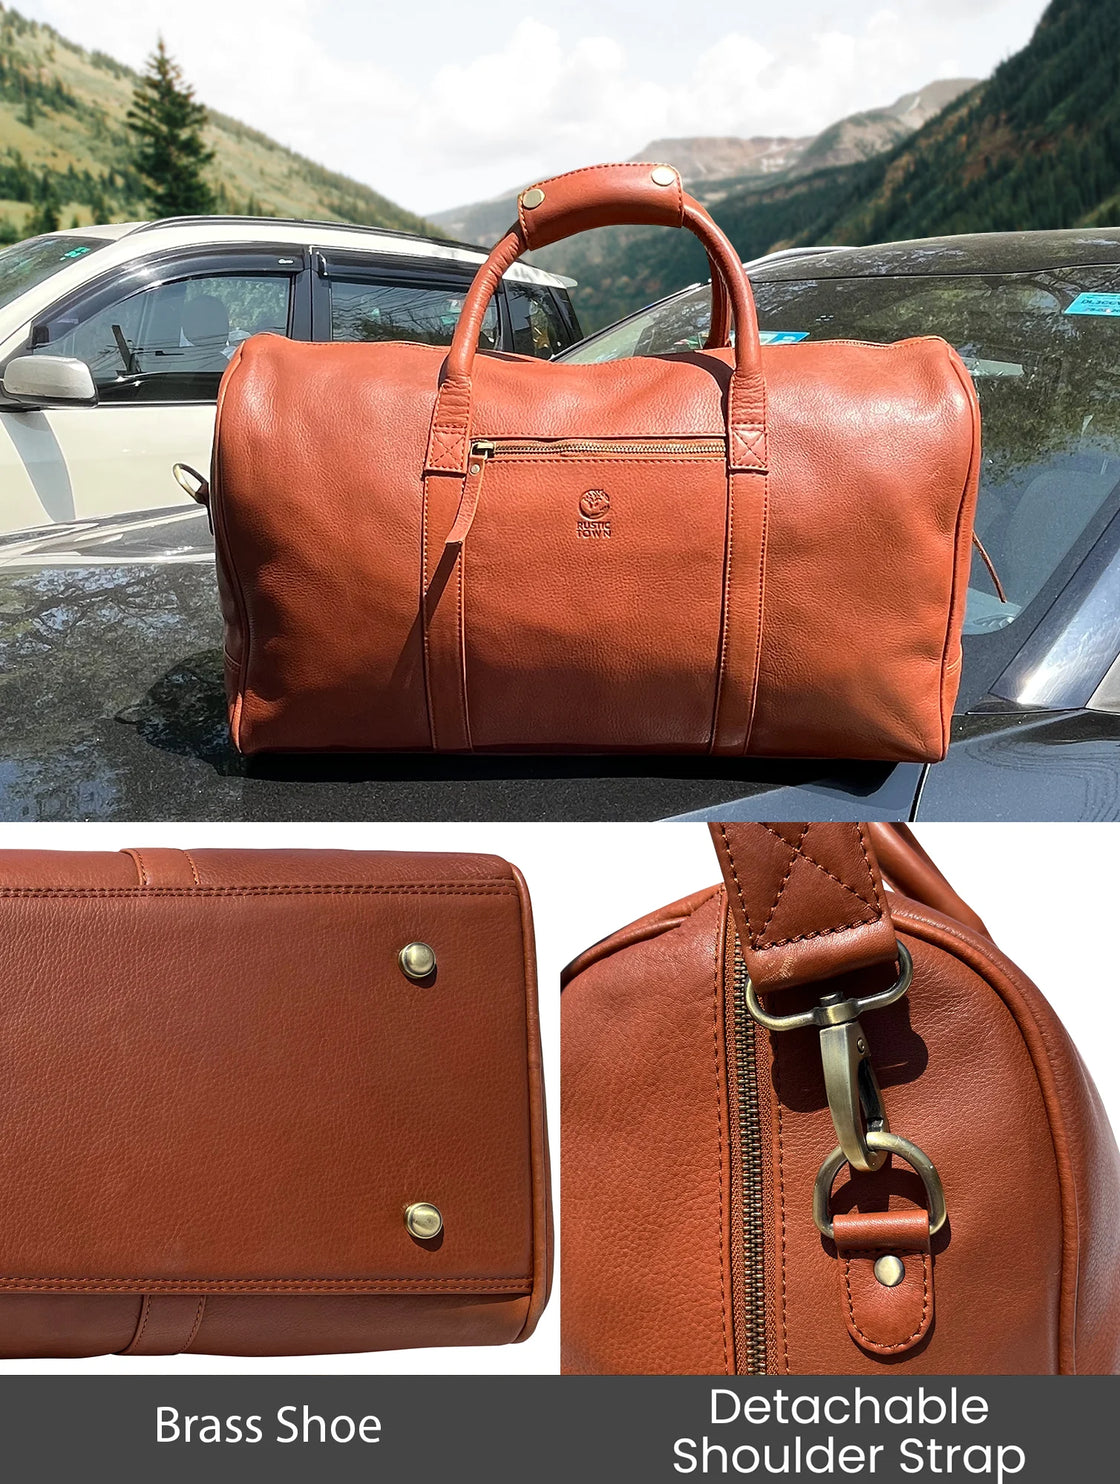 Nando Adventure Leather Duffel Bag OverNight Travel Bag(Brown